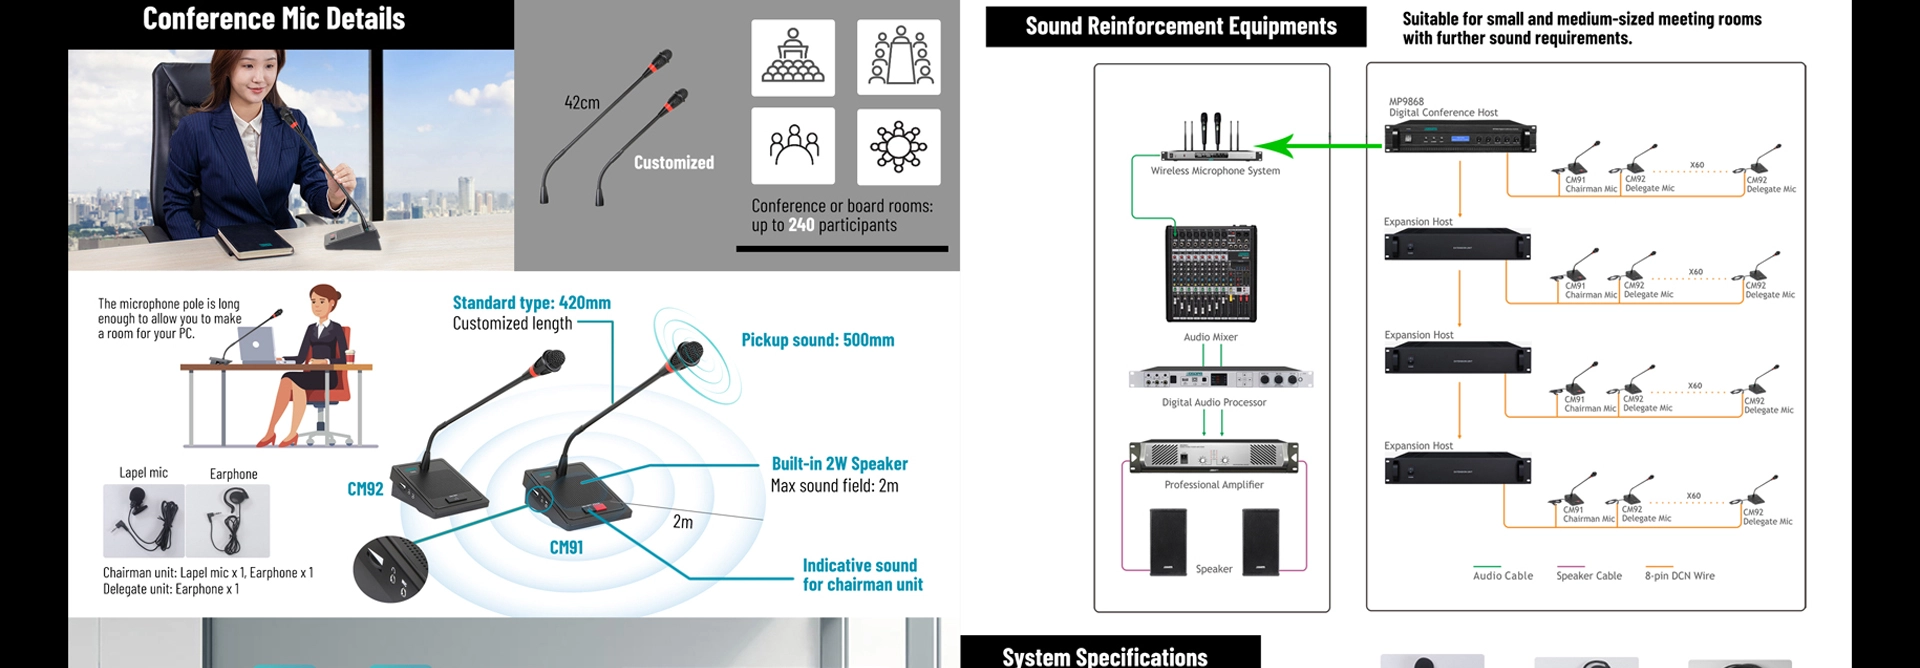 Digital Conference System Delegate Microphone na may built-in speaker